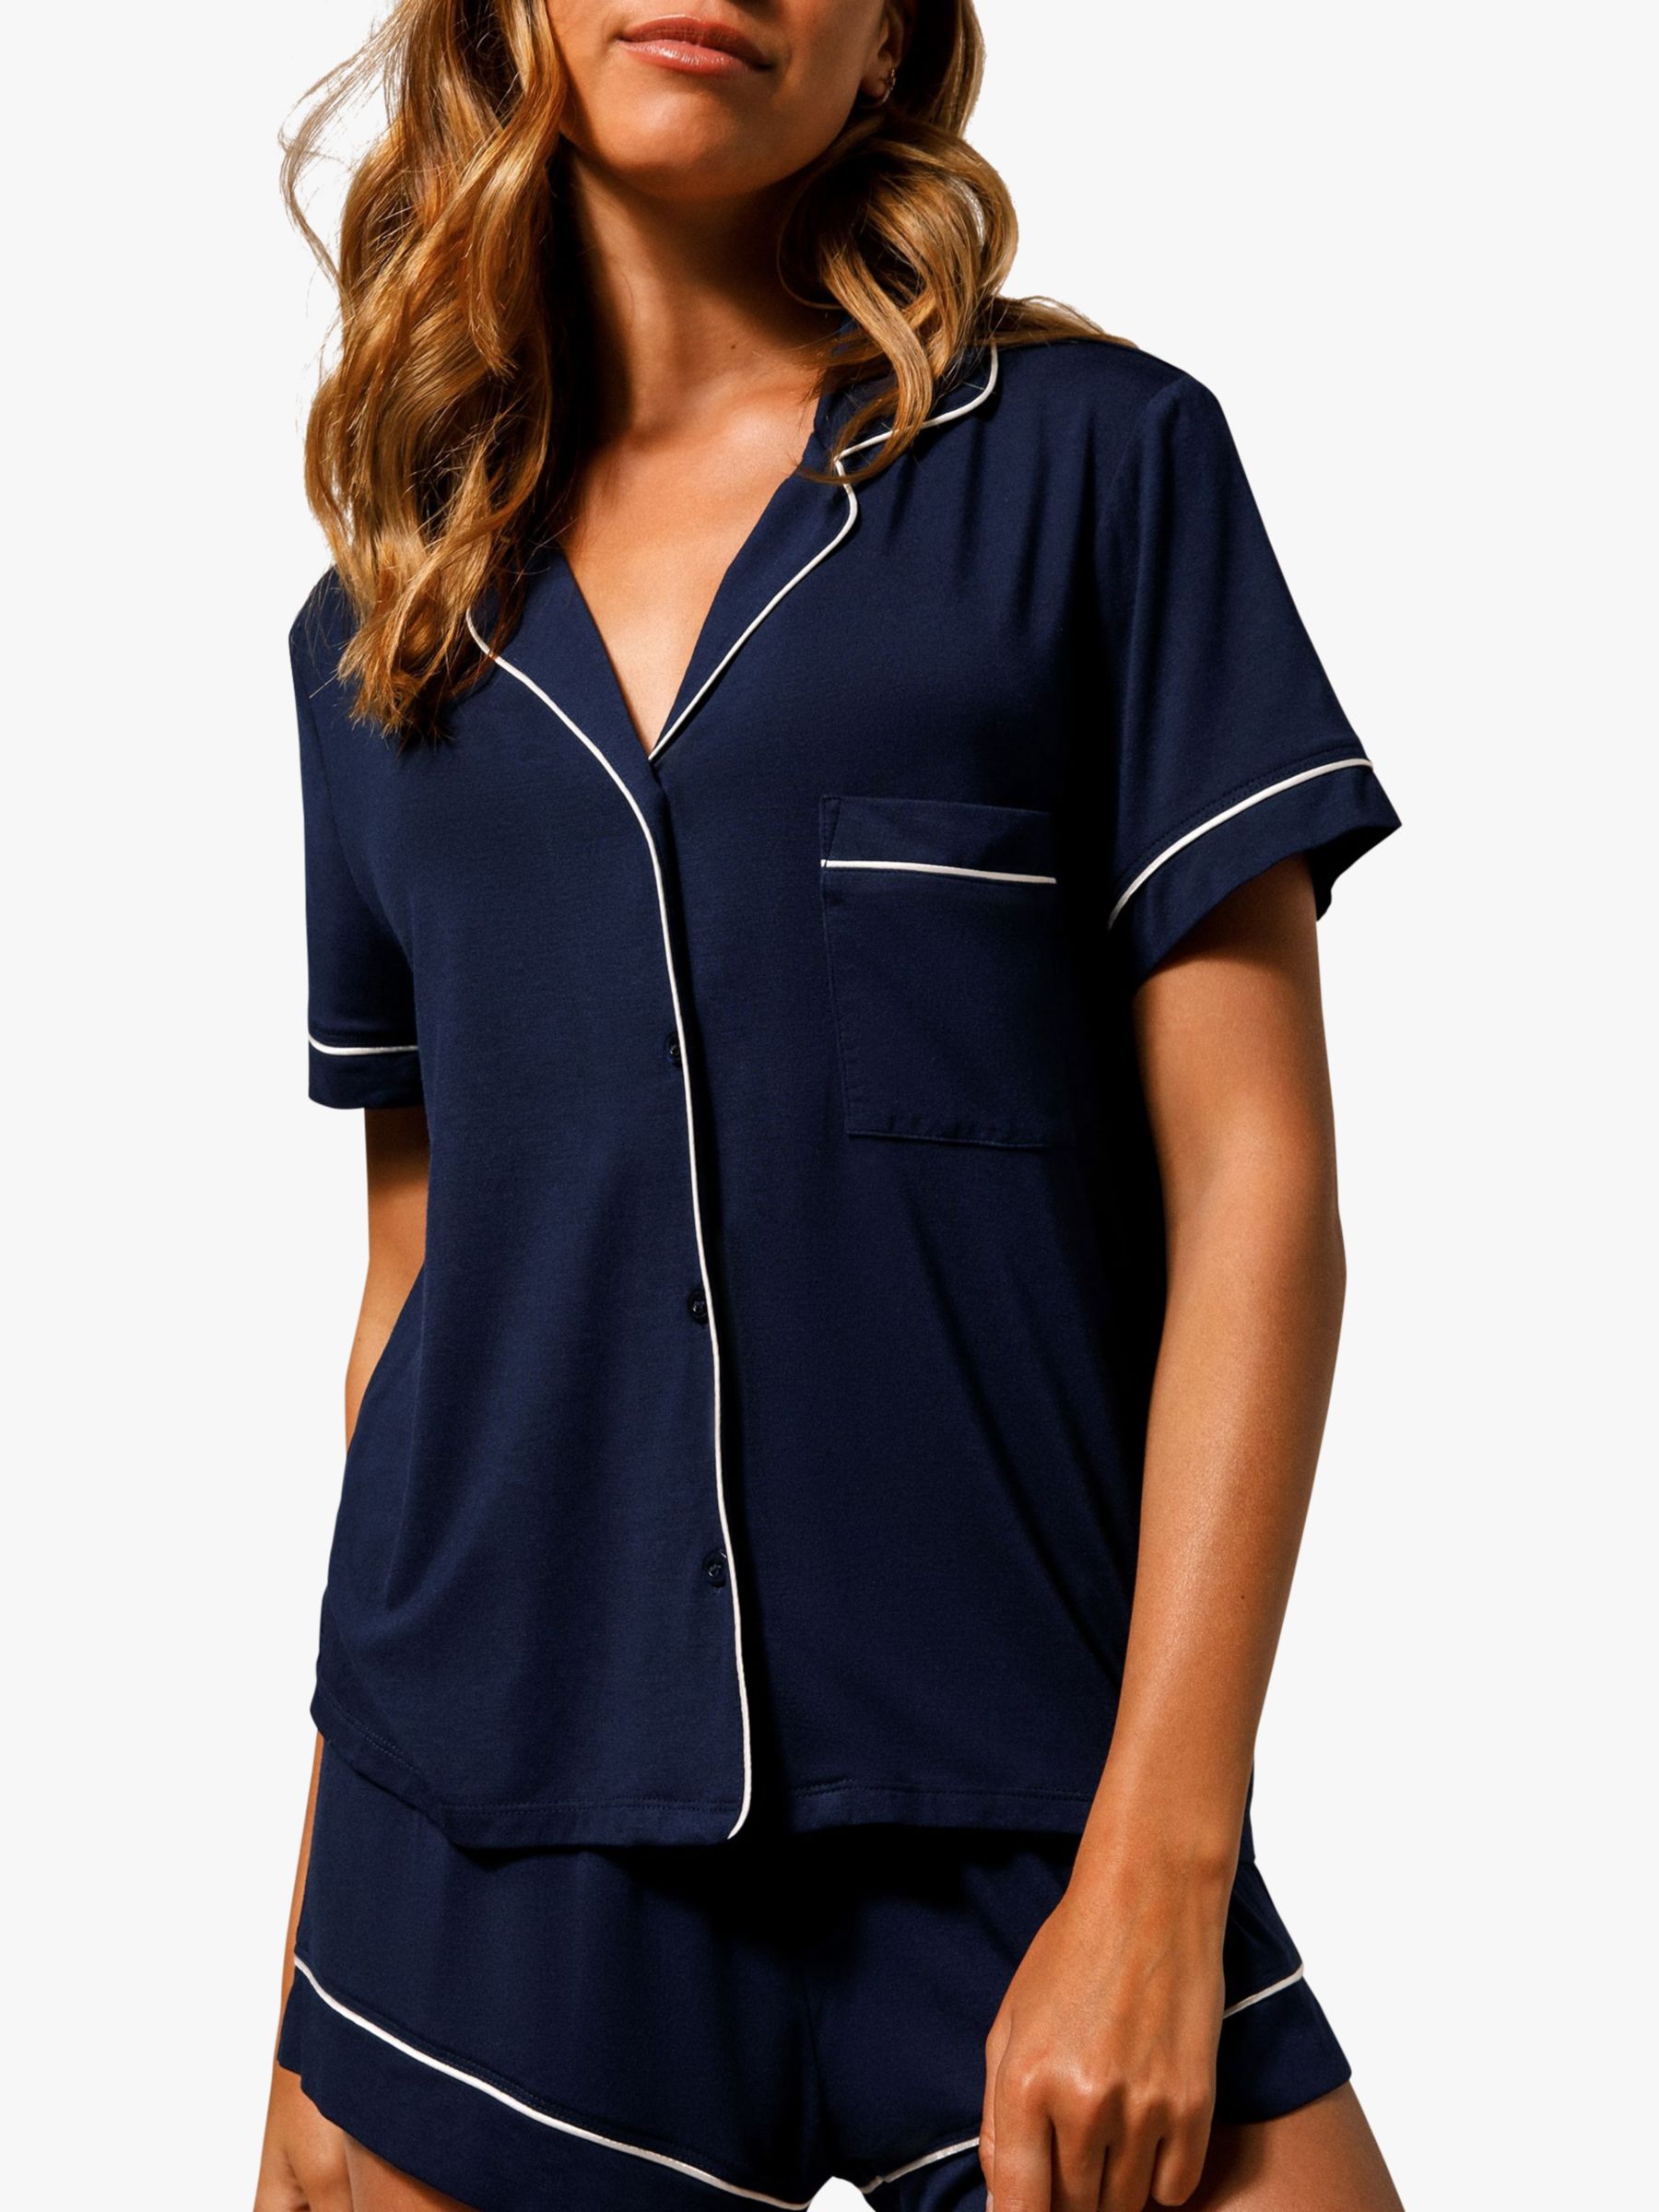 Chelsea Peers Modal Piped Shorts Pyjama Set, Navy, XXS